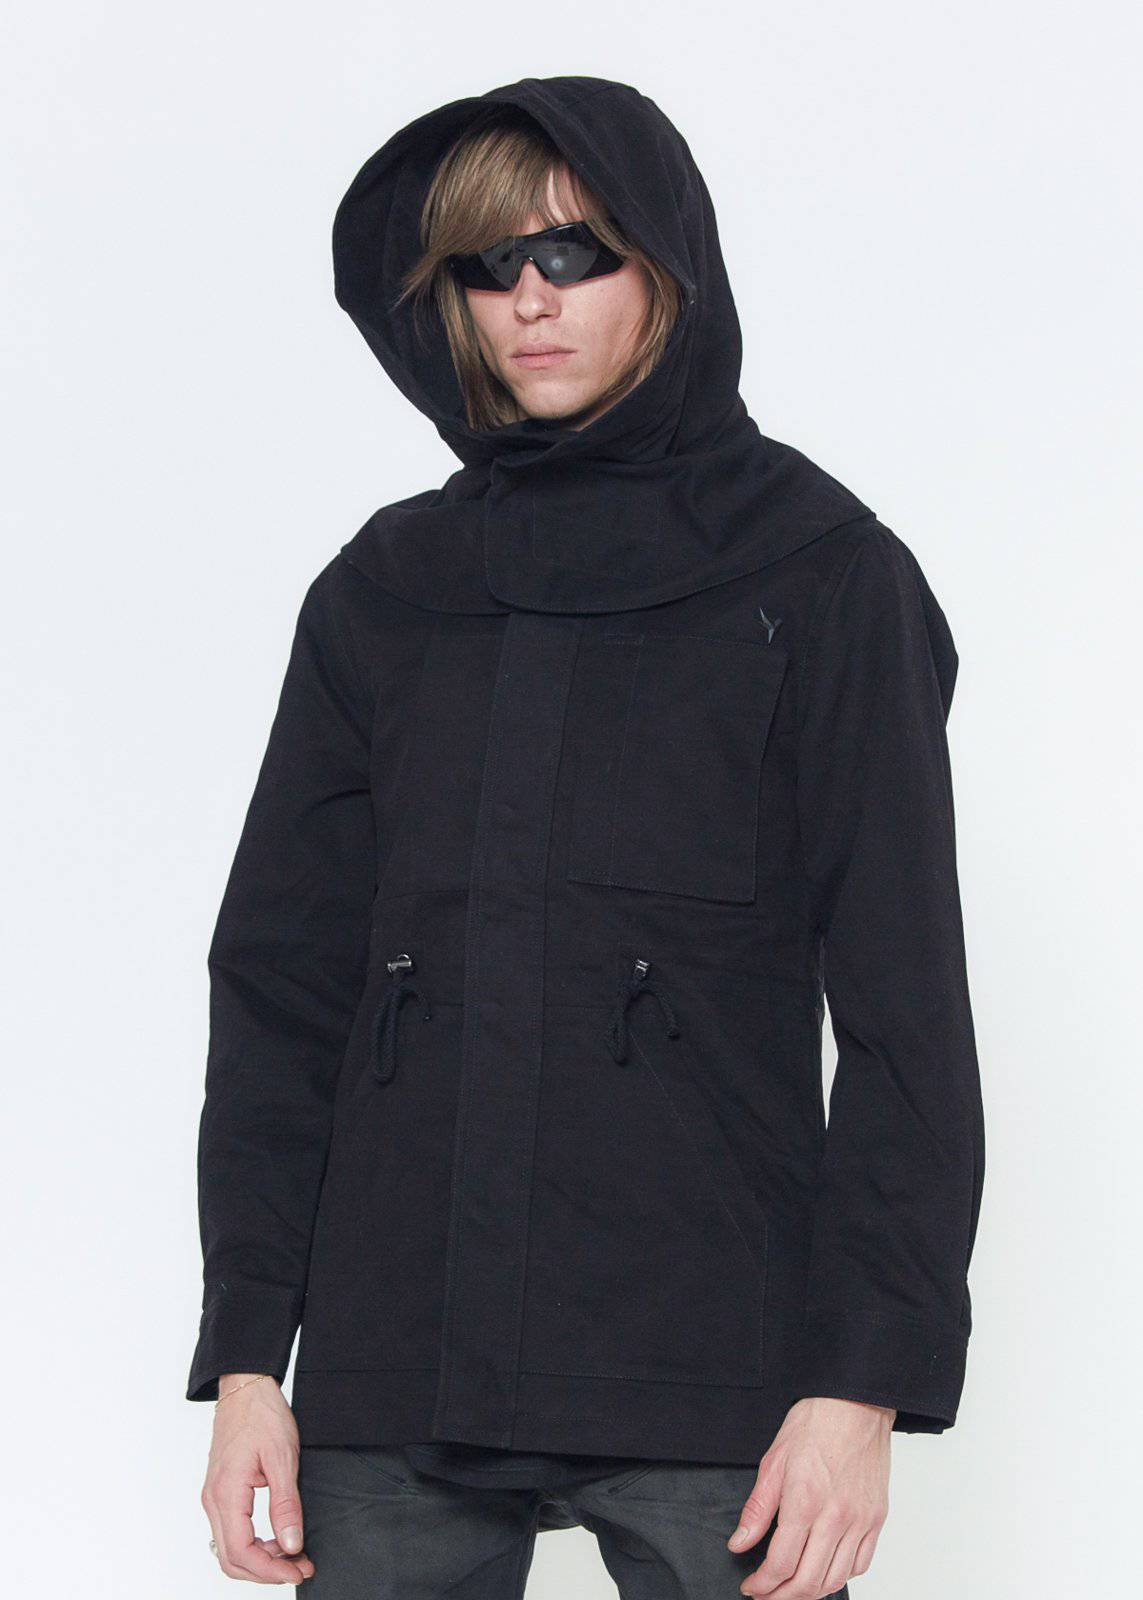 Konus Men's M-65 Jacket With Oversized Hood in Black by Shop at Konus